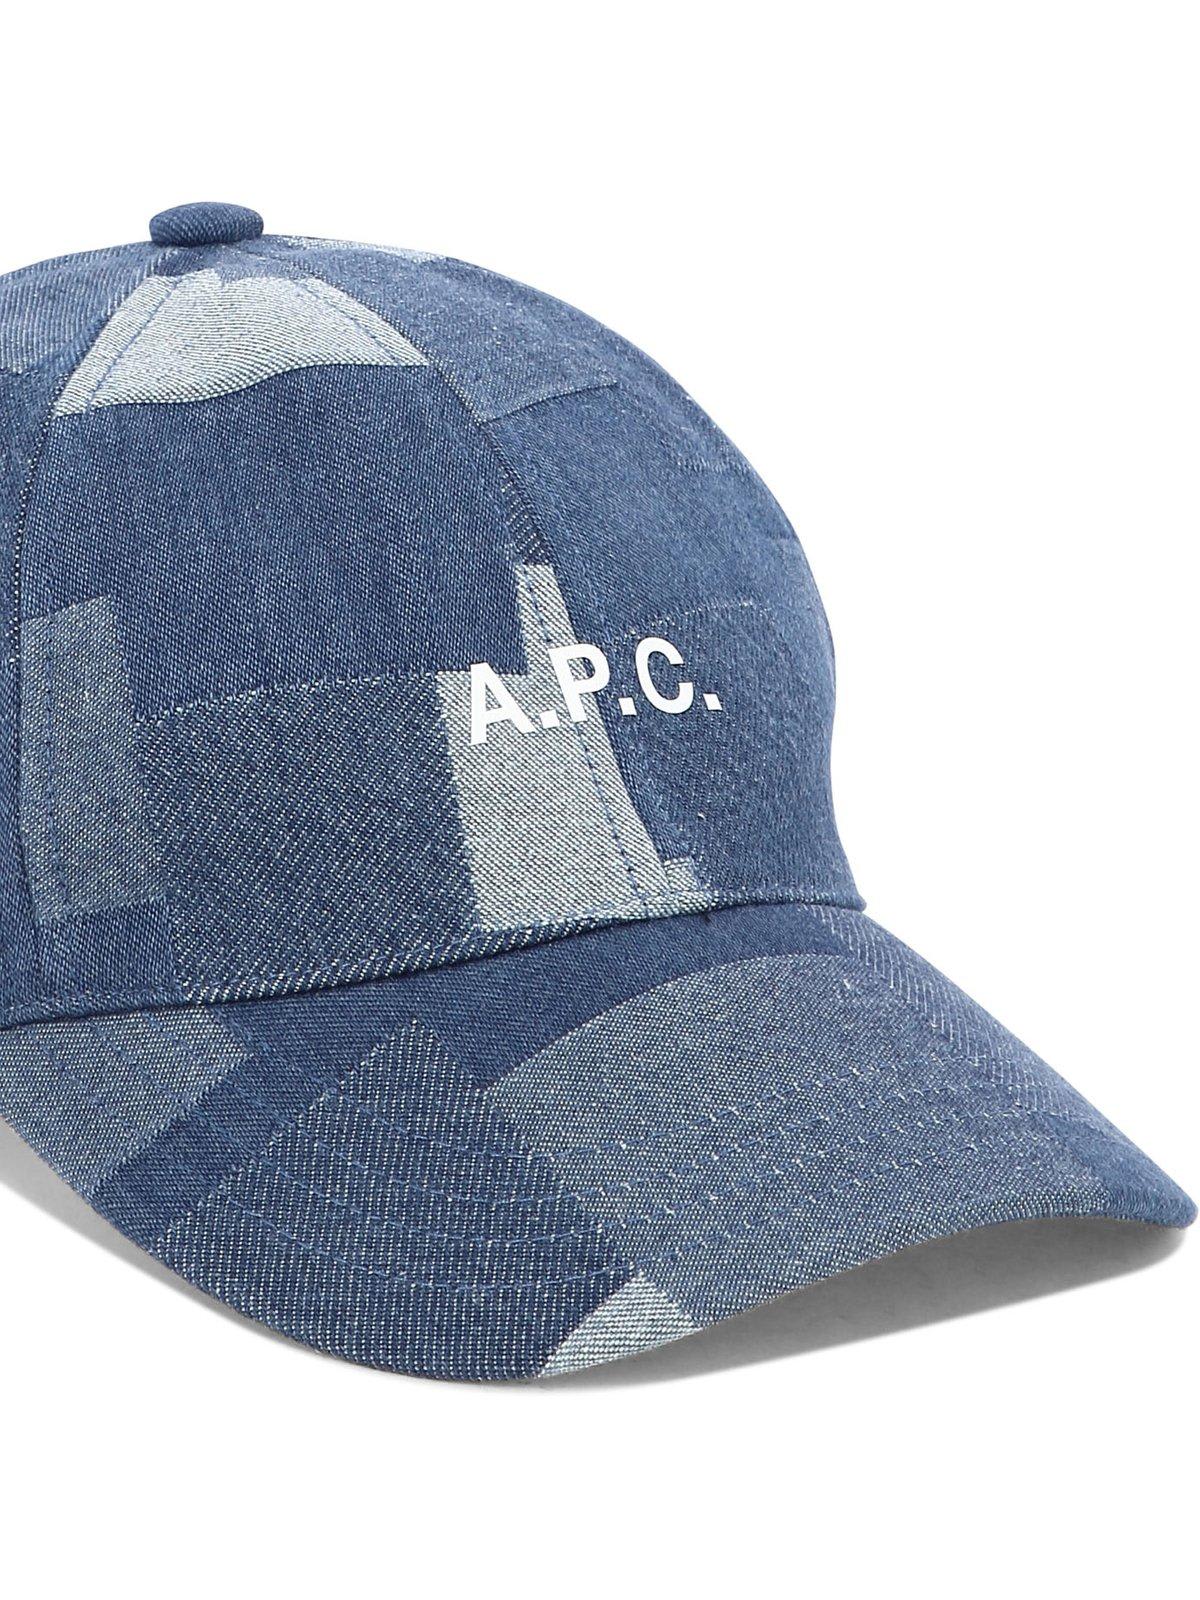 Shop Apc Logo Printed Denim Baseball Cap In Ial Washed Indigo